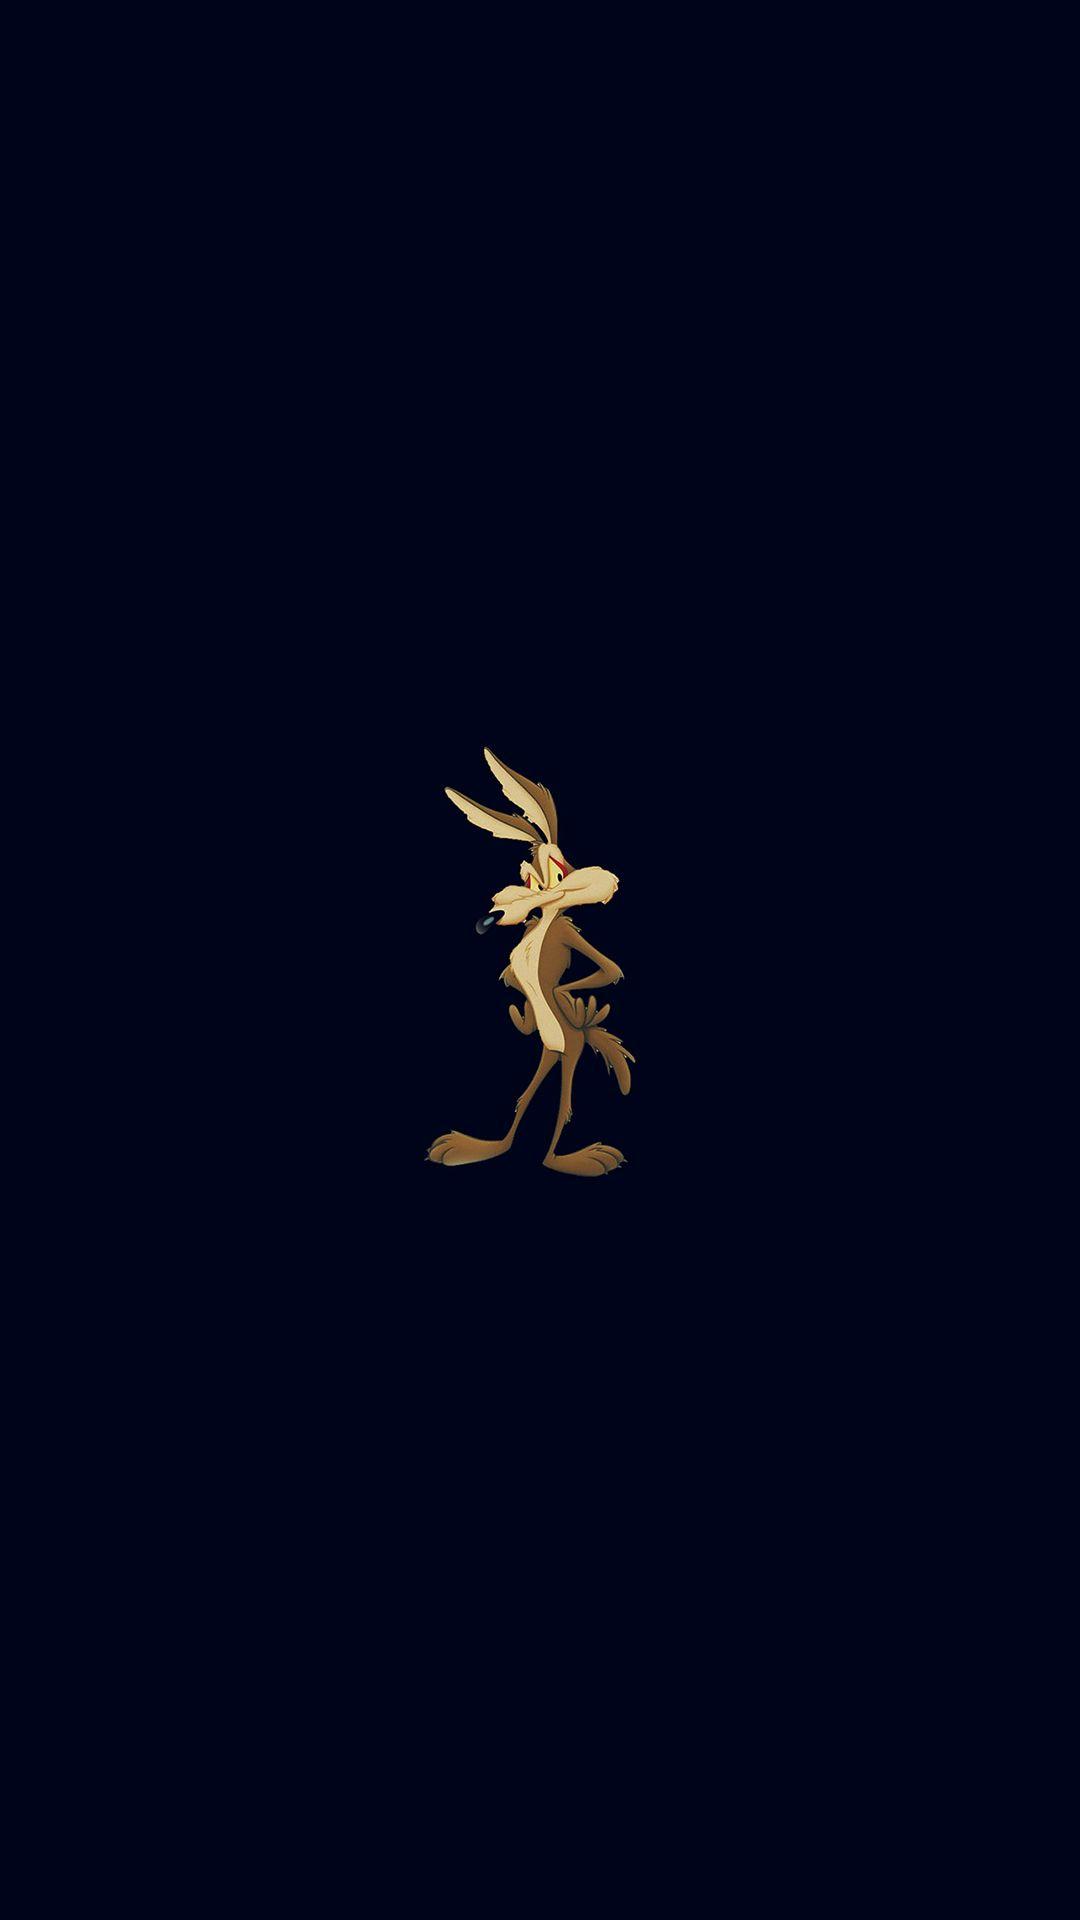 Cute Bugs Bunny Cartoon Dark Illust Art #iPhone